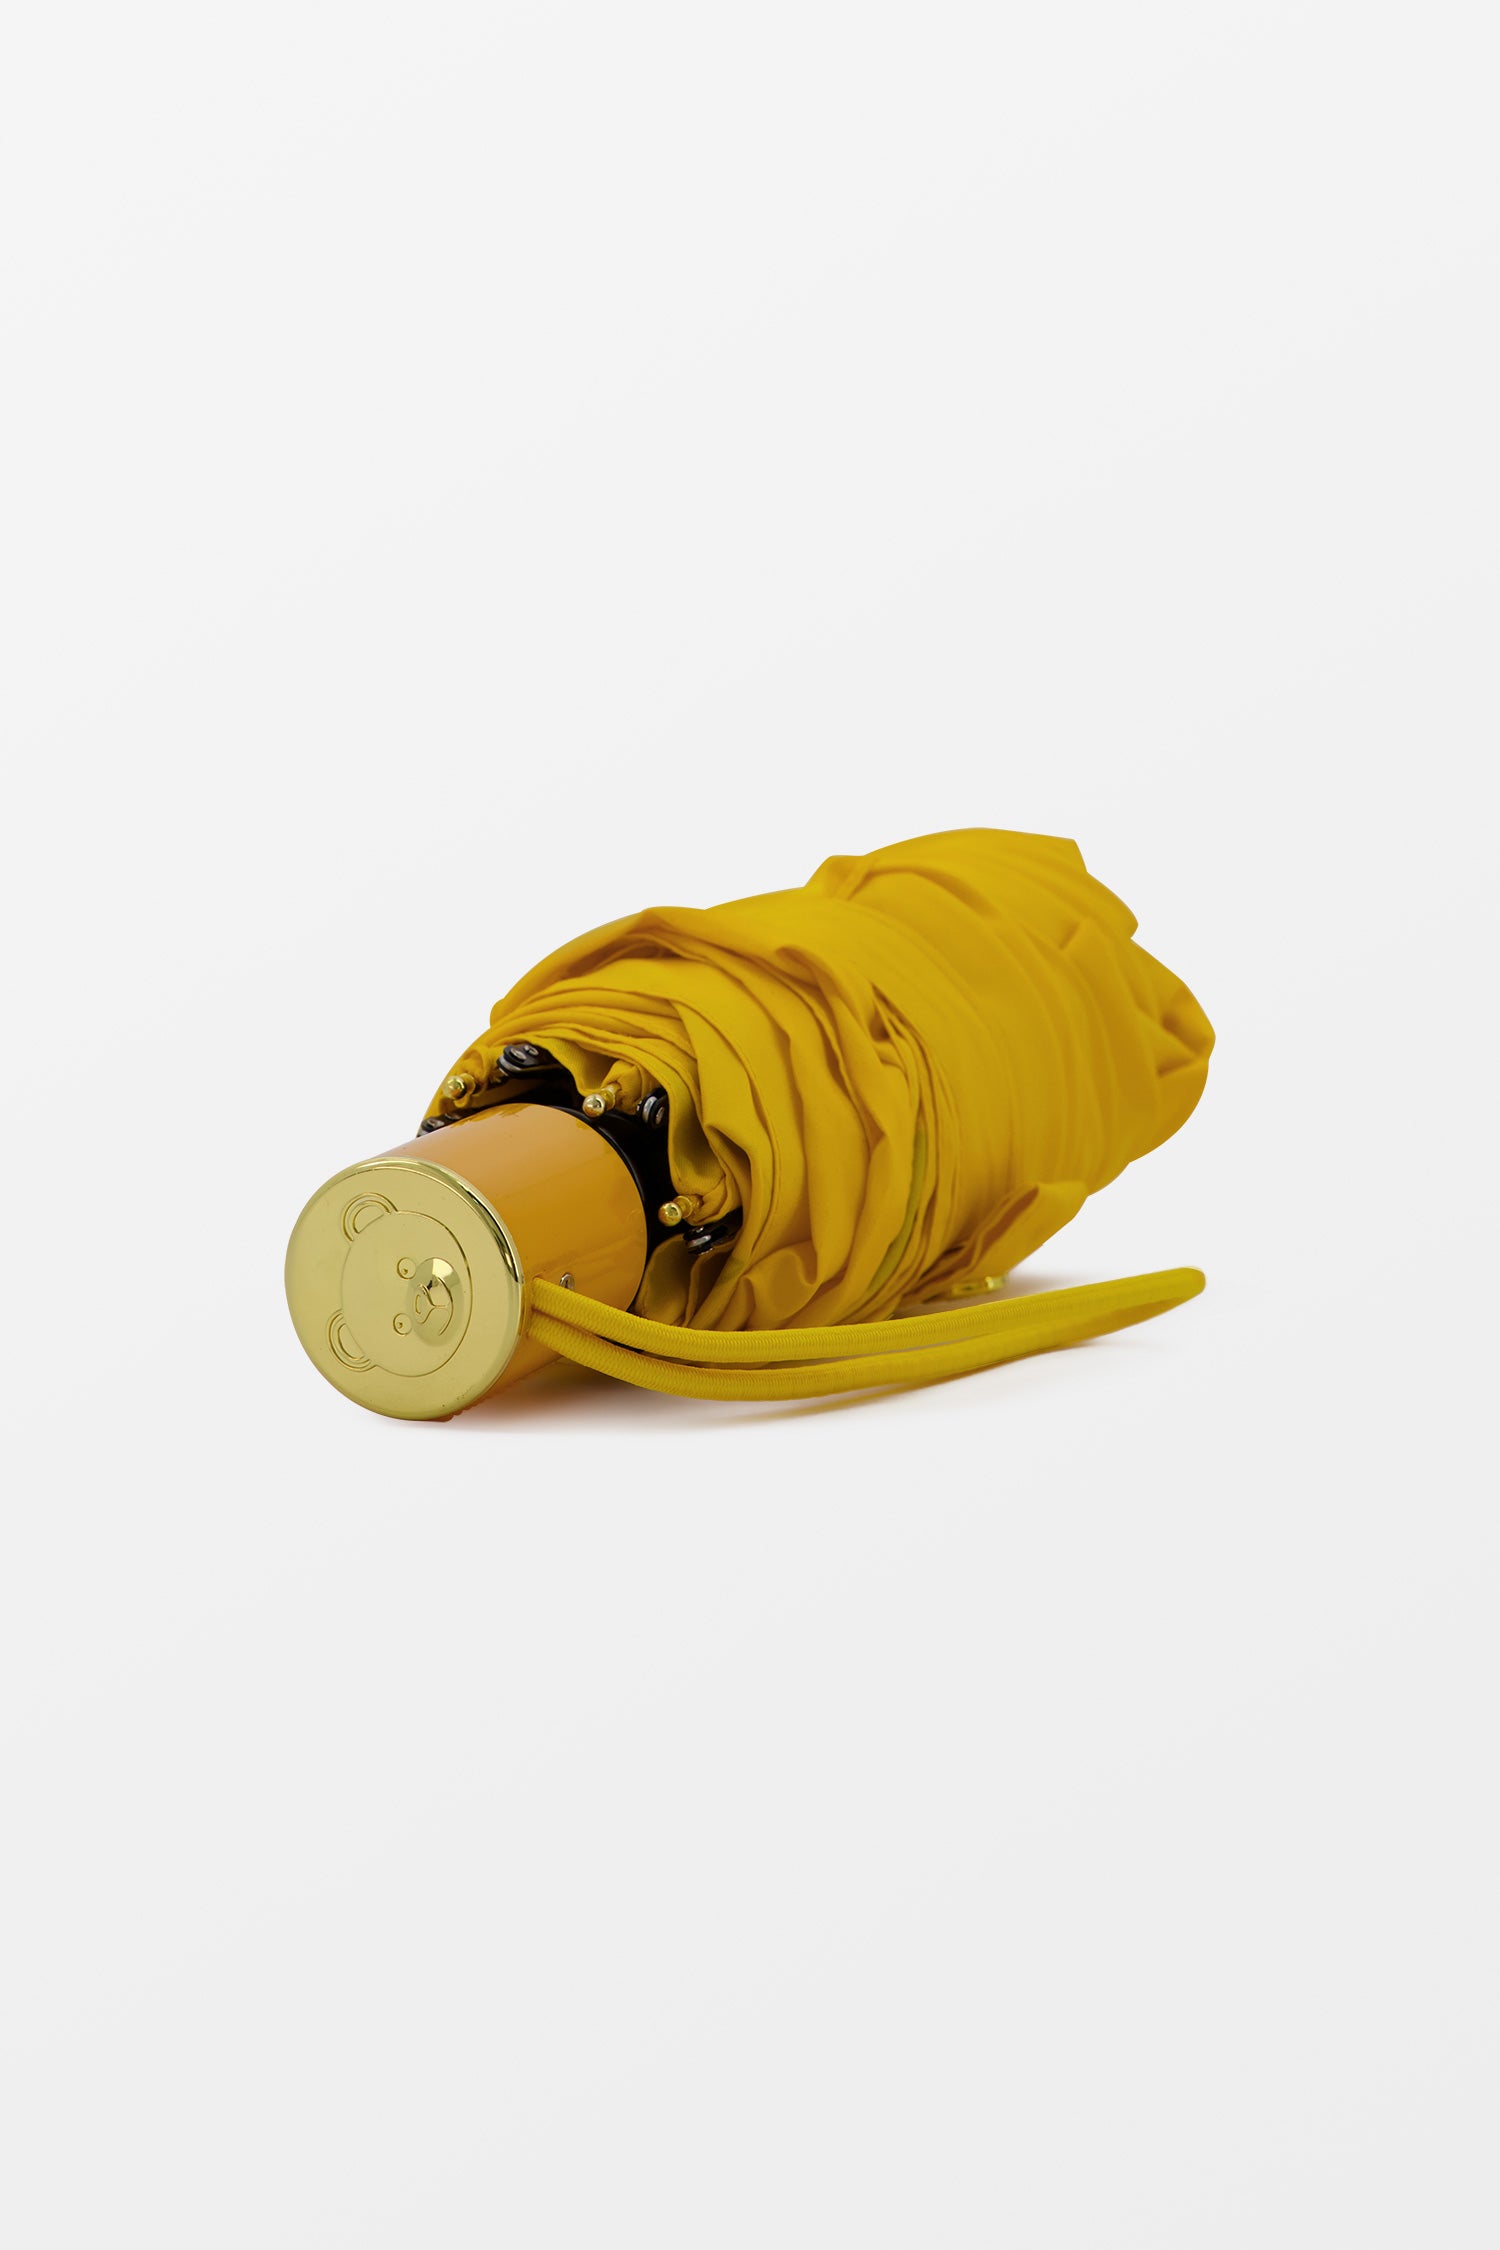 Moschino Toy Stars Compact Yellow Umbrella